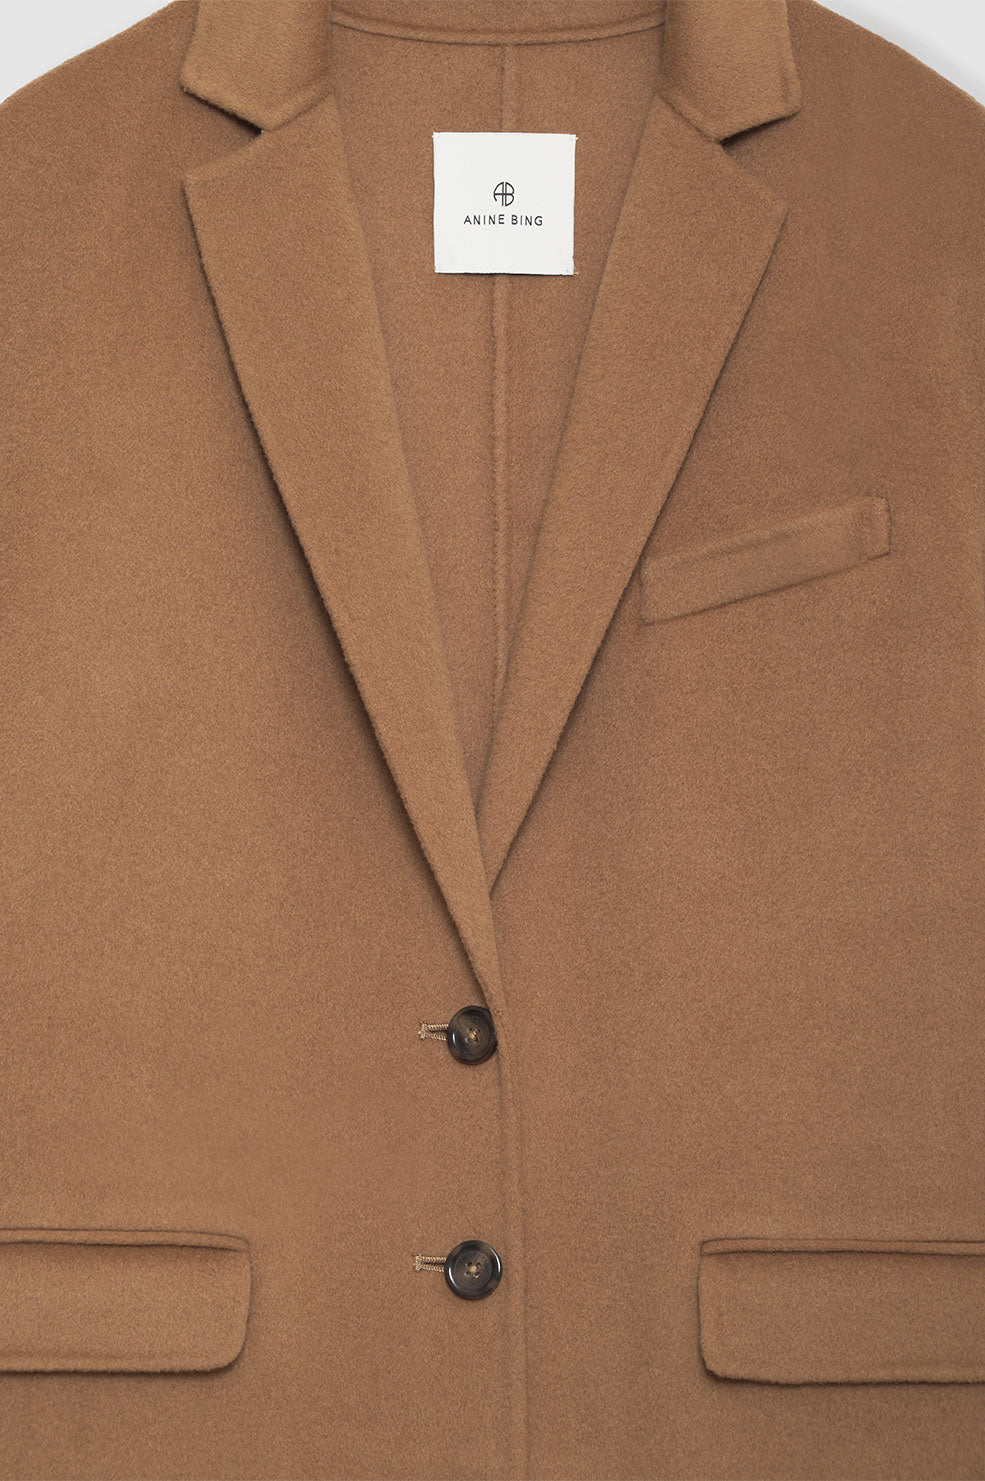 ANINE BING Quinn Coat - Camel Cashmere Blend - Detail View